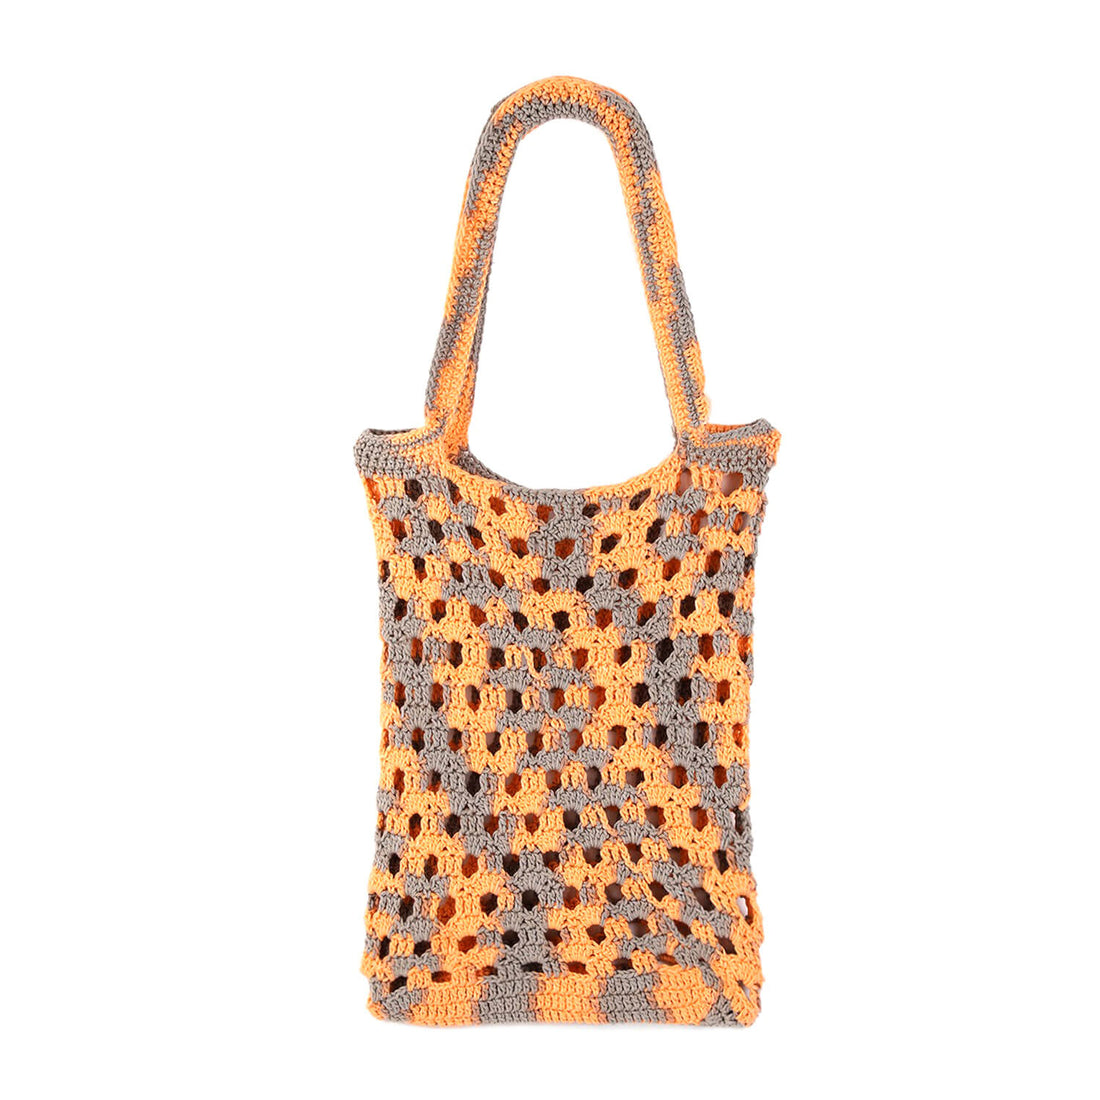 Handmade Crochet Market Bag - Peach, Grey 2643